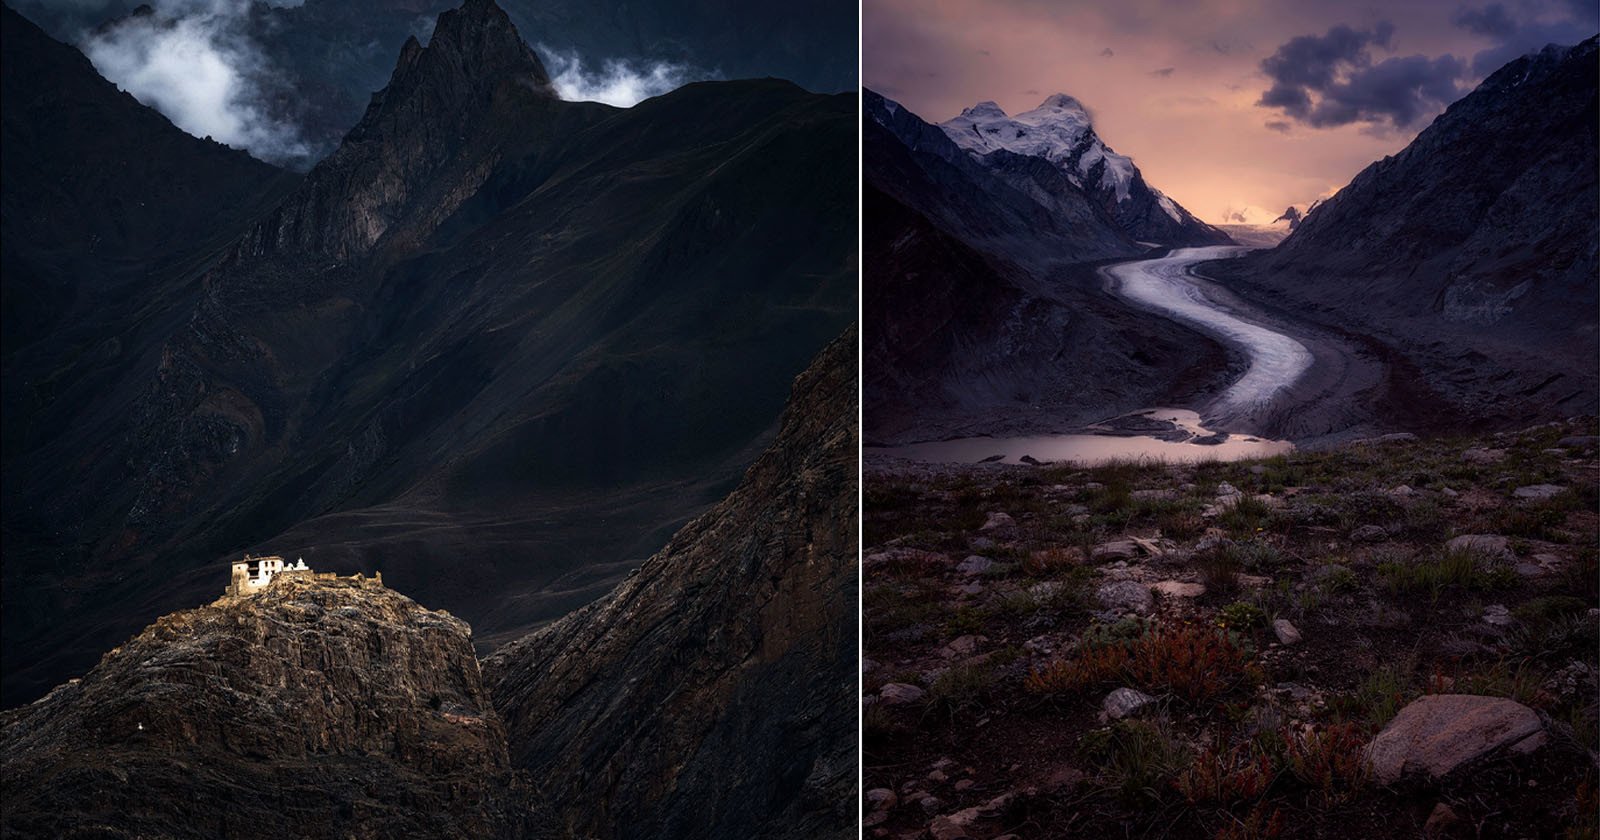 Landscape Photographer Captures the Mystic Allure of the Zanskar Valley